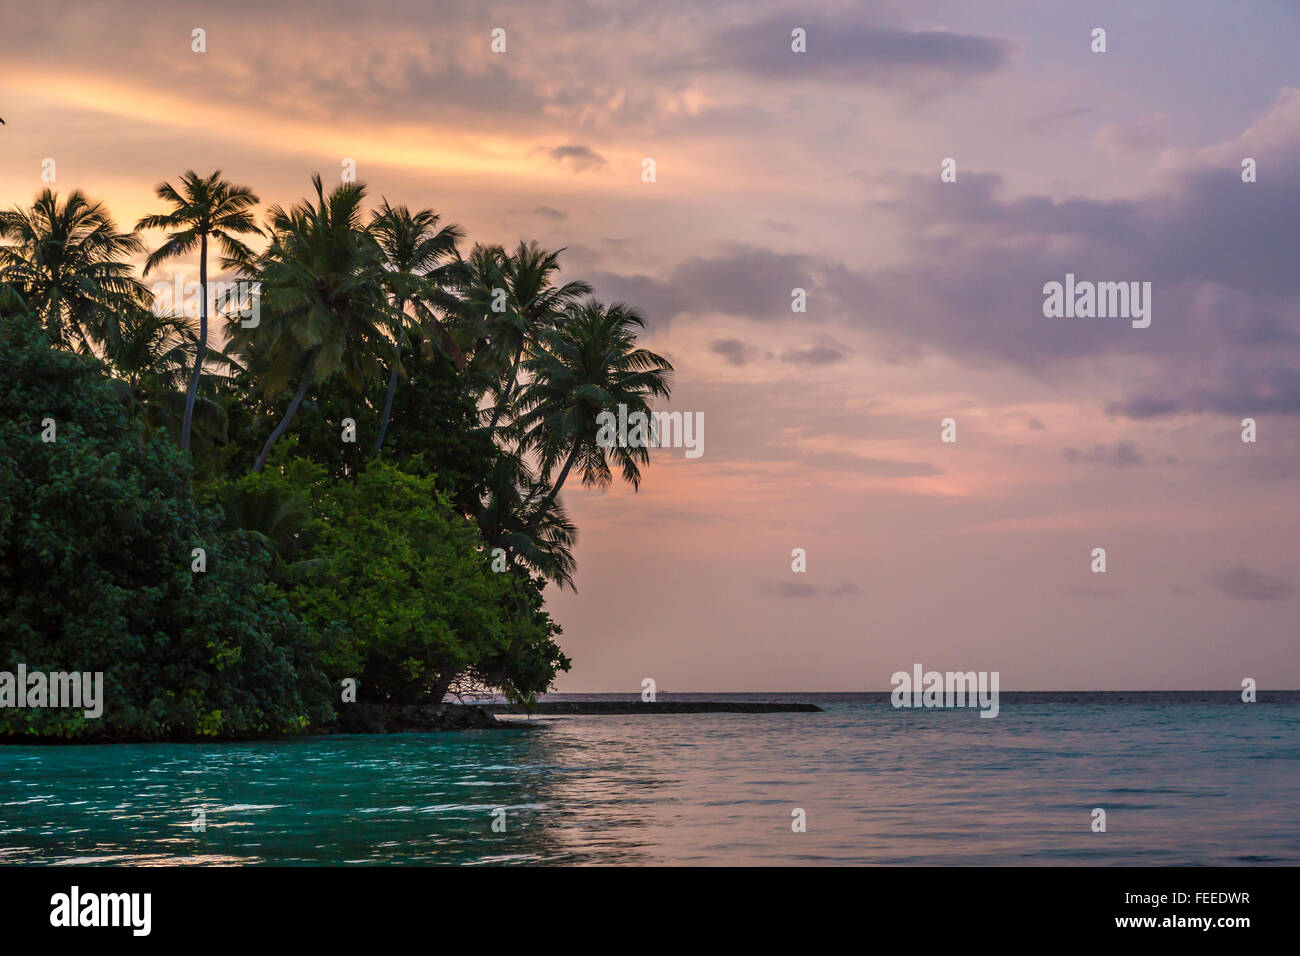 Sonnenuntergang und Palmen, tropische Insel, Malediven Stockfoto